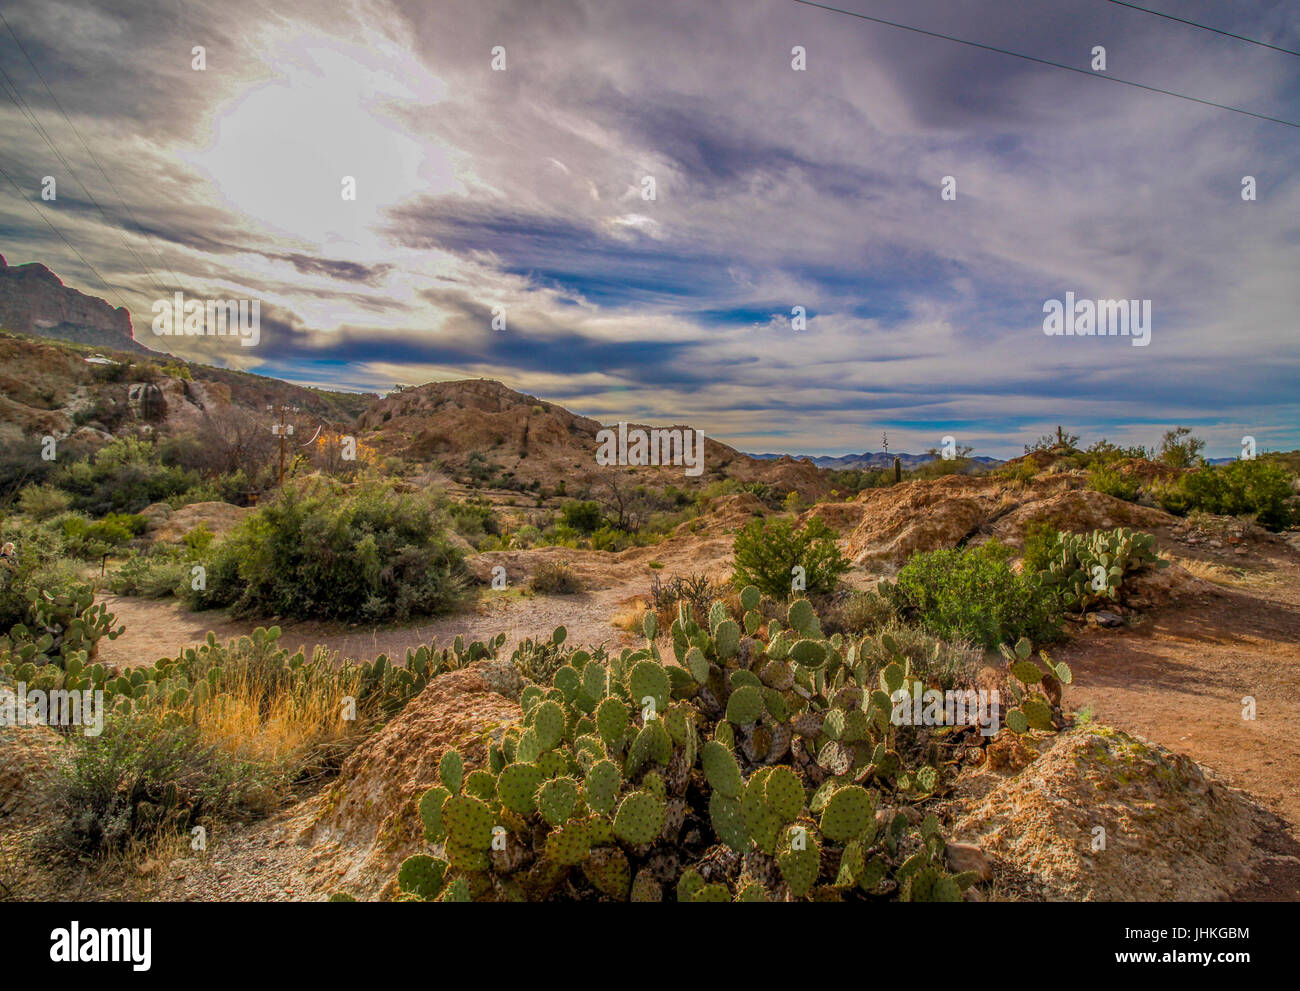 Arizona Landscape with Sun Peeking Through Clouds Stock Photo